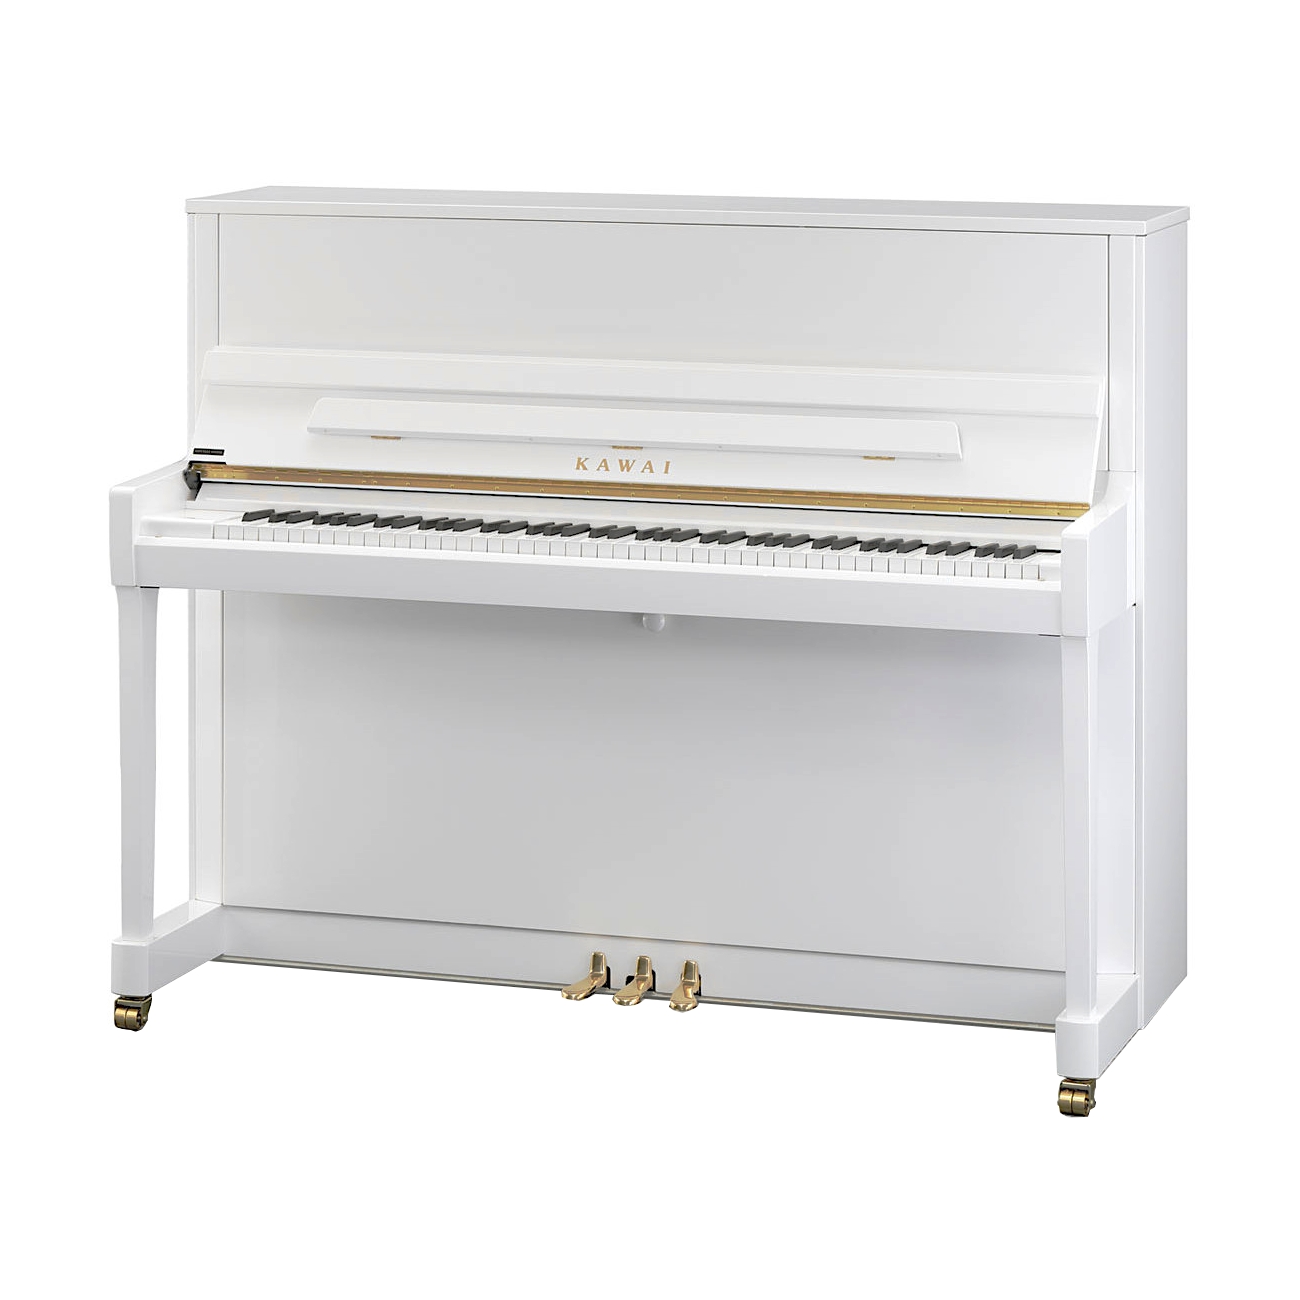 KAWAI K-300(KI) WH/P - пианино, 122х149х61, 227 кг., цвет белый полиров., механизм Millennium III.